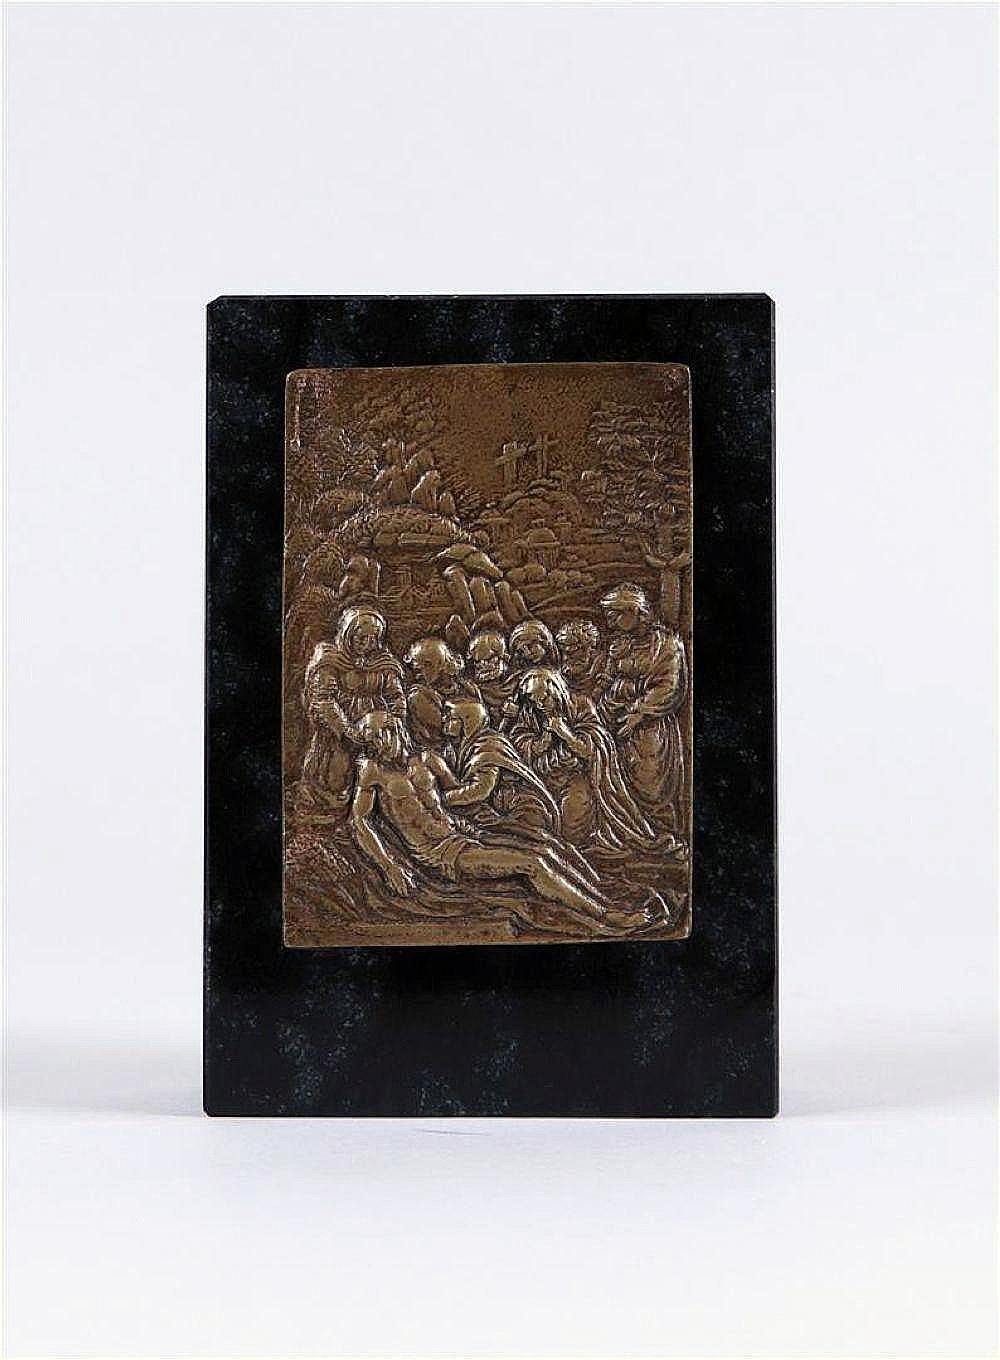 Renaissance bronze plaquette of the Lamentation from the school of Raphael

Attributed to Cesarino da Perugia
Rome, Italy; ca. 1522-24
Bronze (plaquette); black marble (mount)

Approximate size:  10.5 x 7.3 cm (plaquette)

The present plaquette,